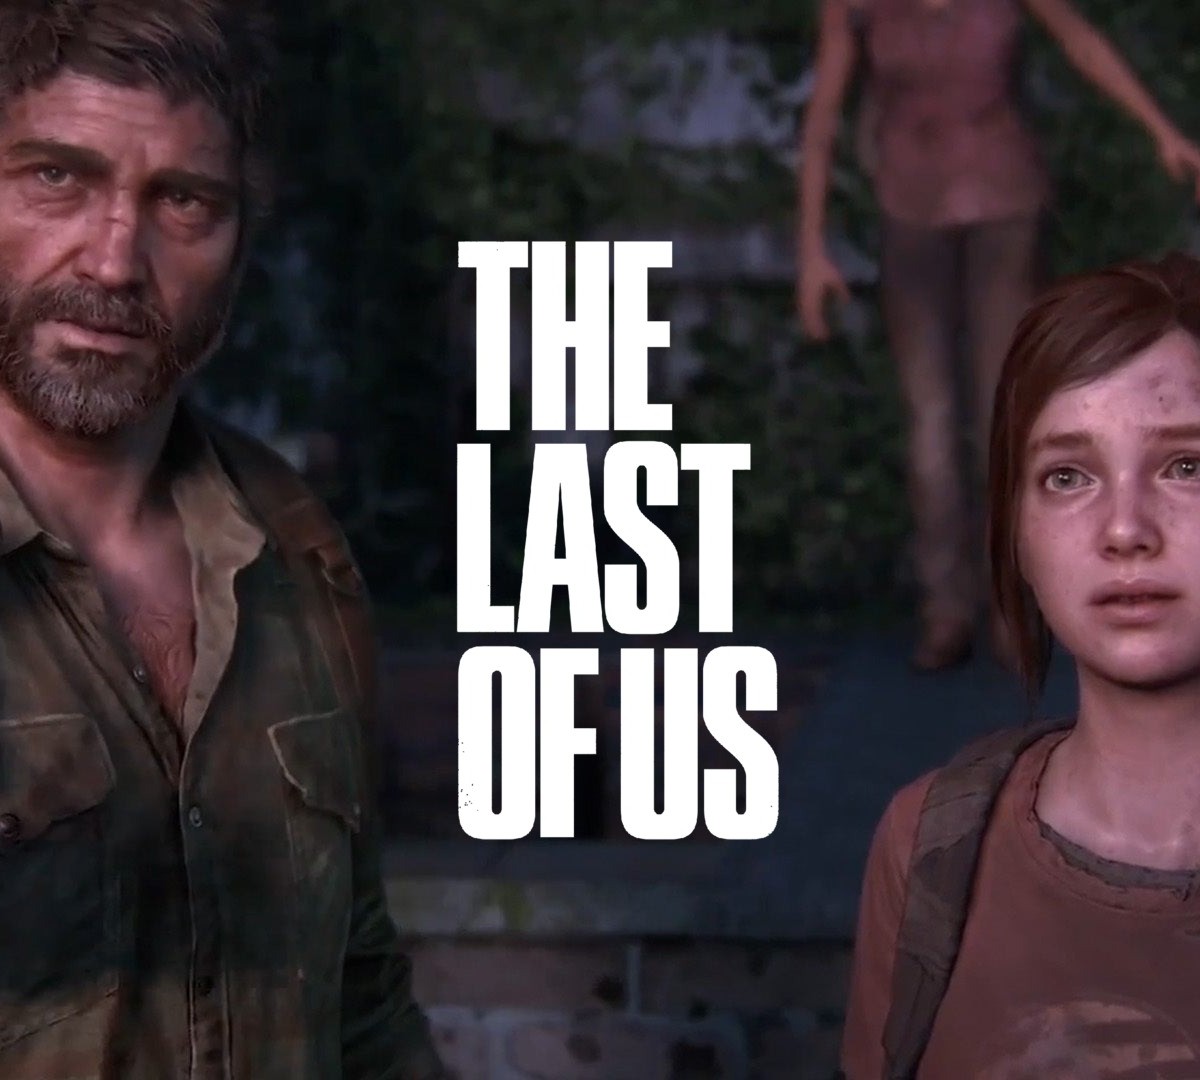 The Last of Us Part I chega para PC logo após PS5, diz dev